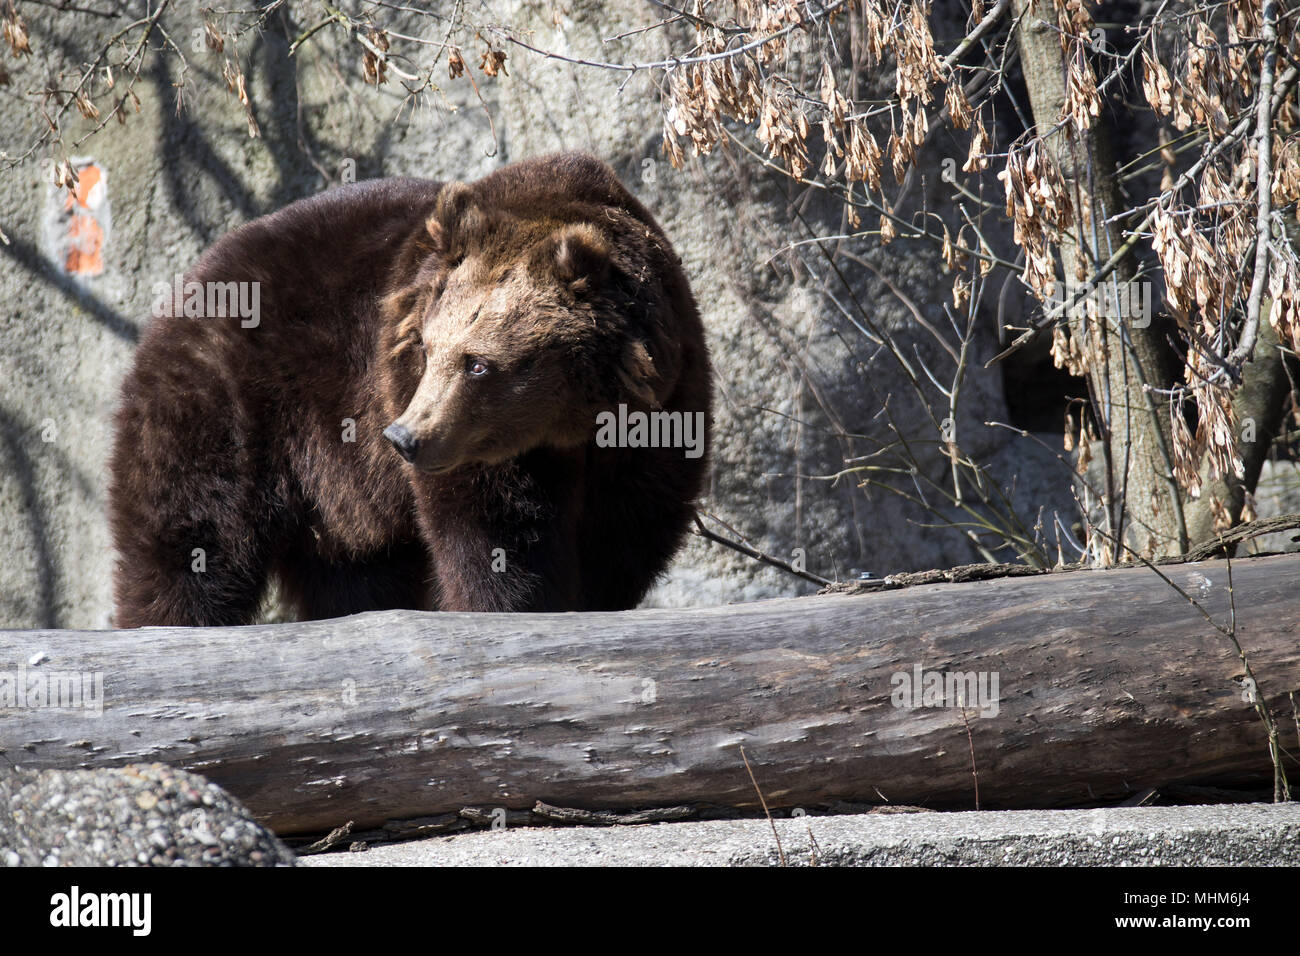 WARSAW, POLAND - APRIL 28, 2018: Brown bear in Prague Park - Praski Park near Zoo in Warsaw, Poland Stock Photo